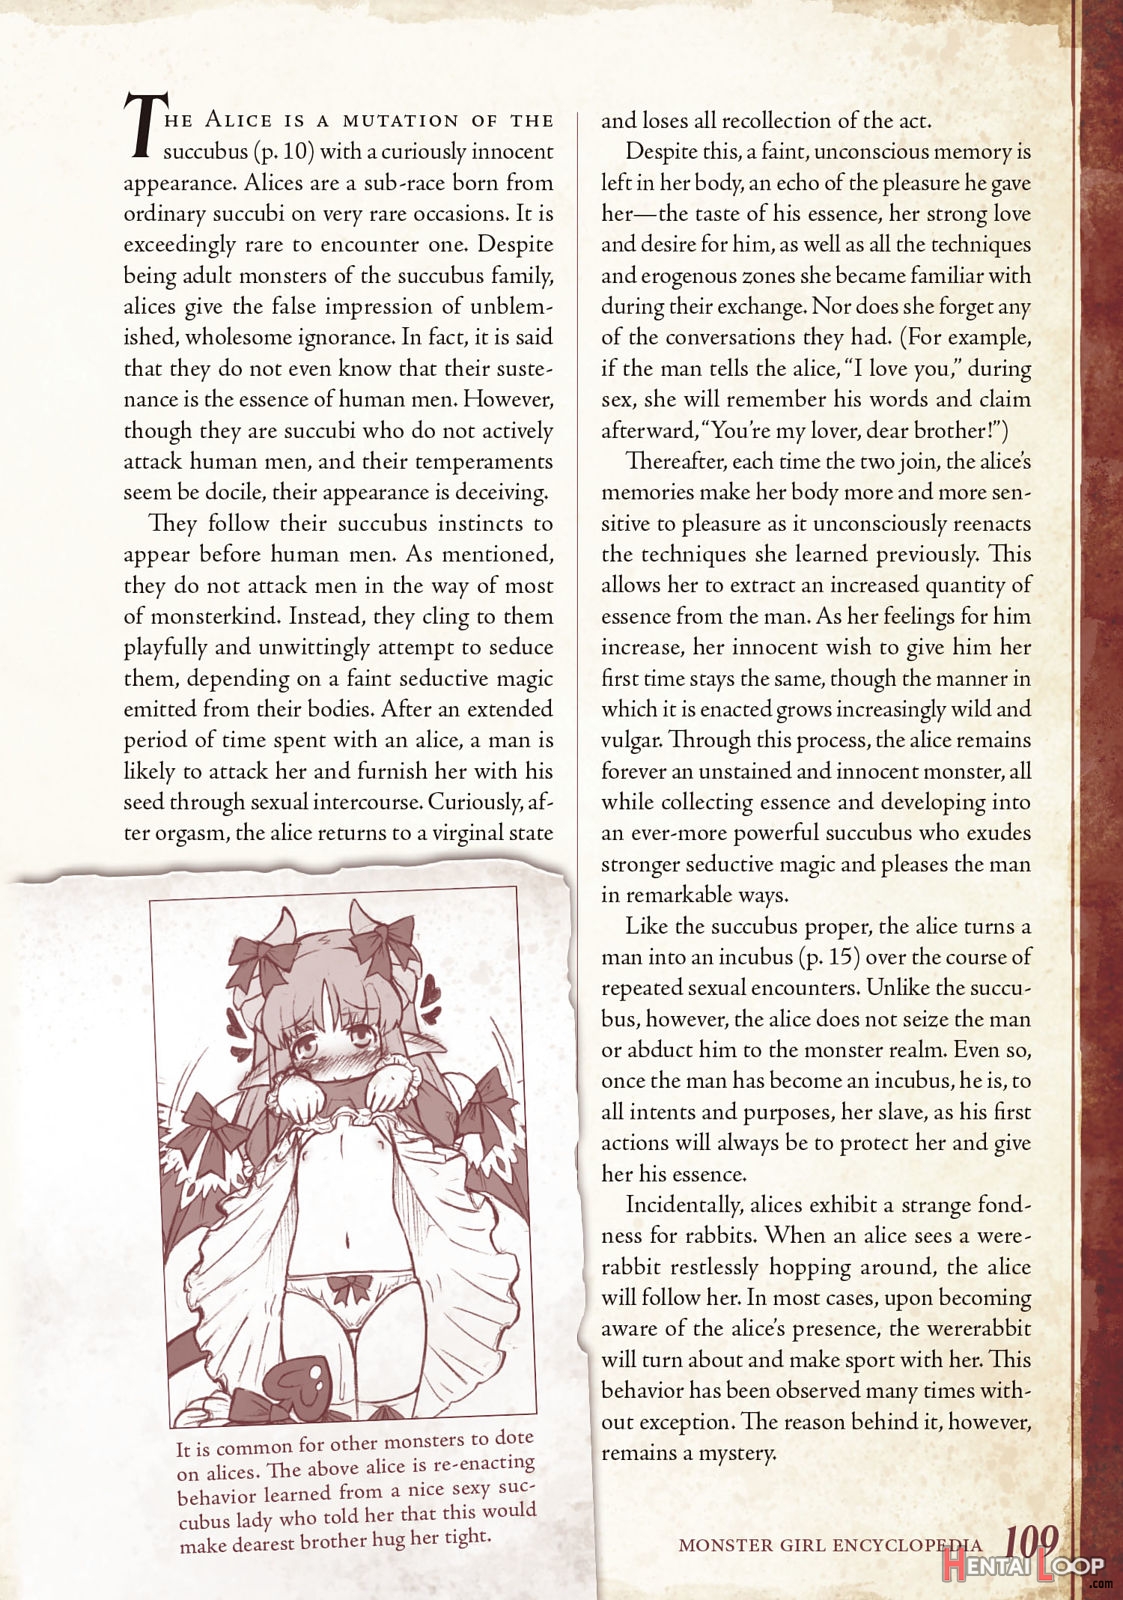 Monster Girl Encyclopedia Vol. 1 page 110